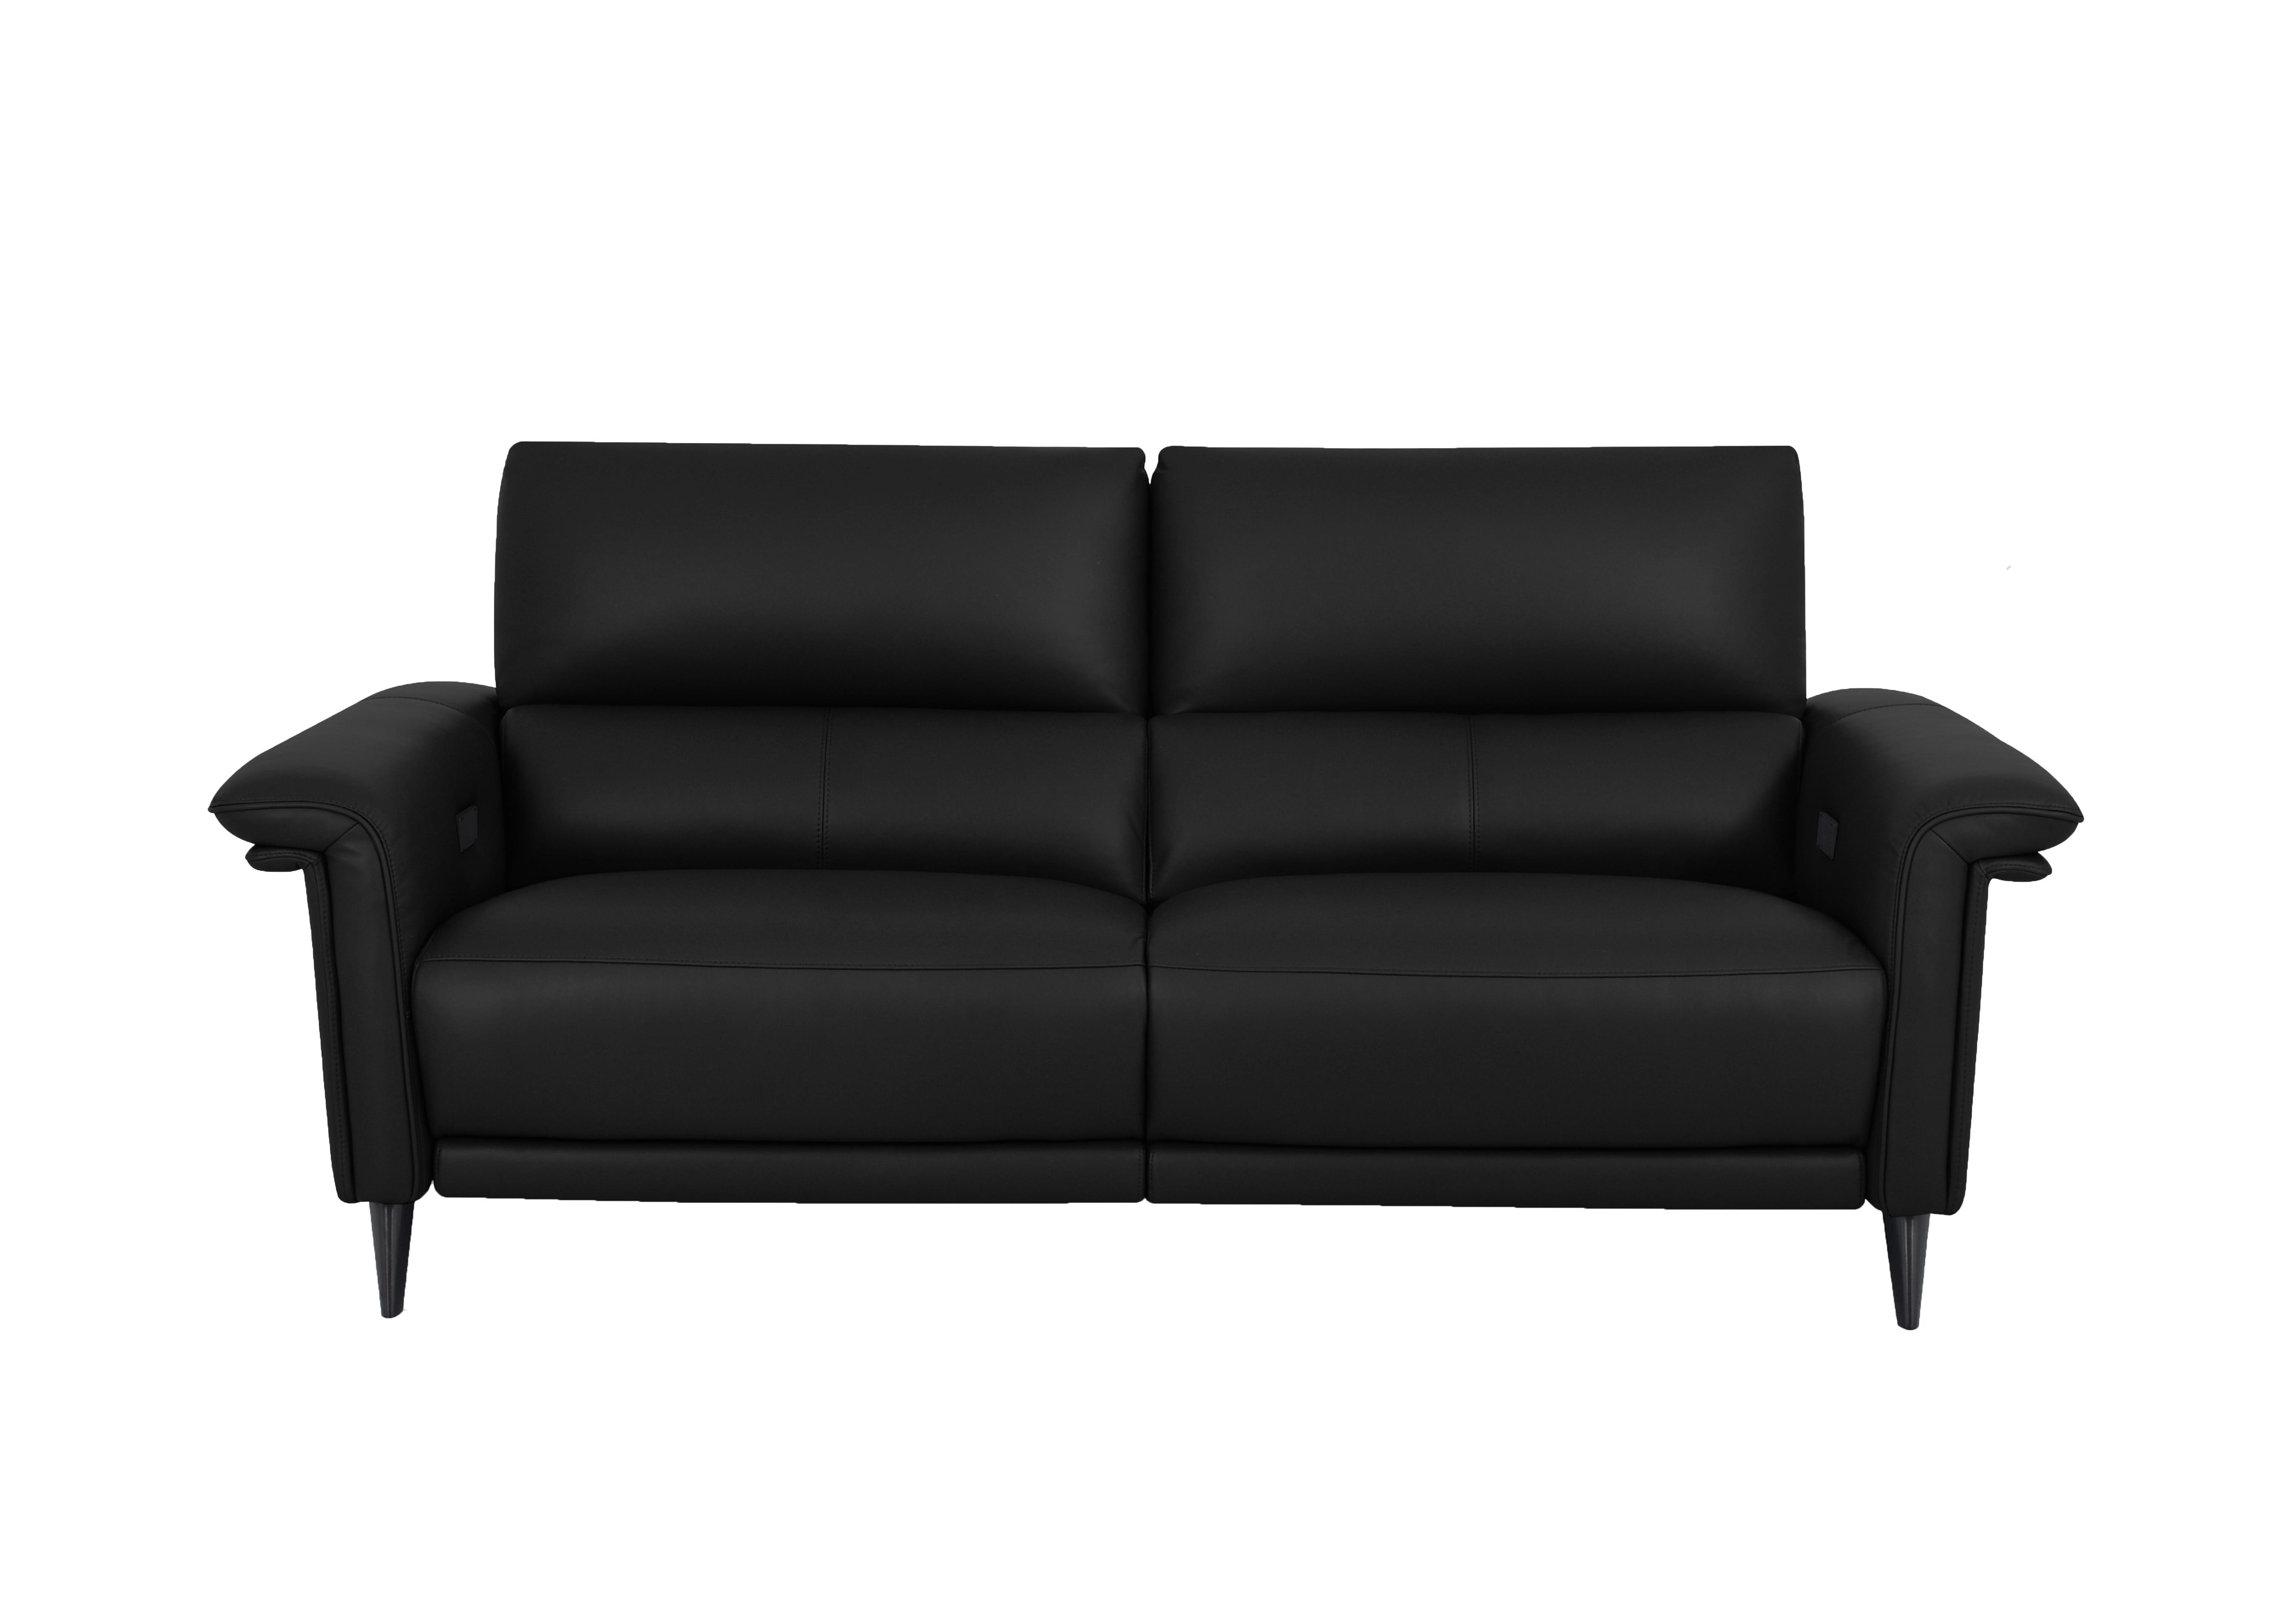 Huxley 3 Seater Leather Sofa in Nn-514e Black on Furniture Village